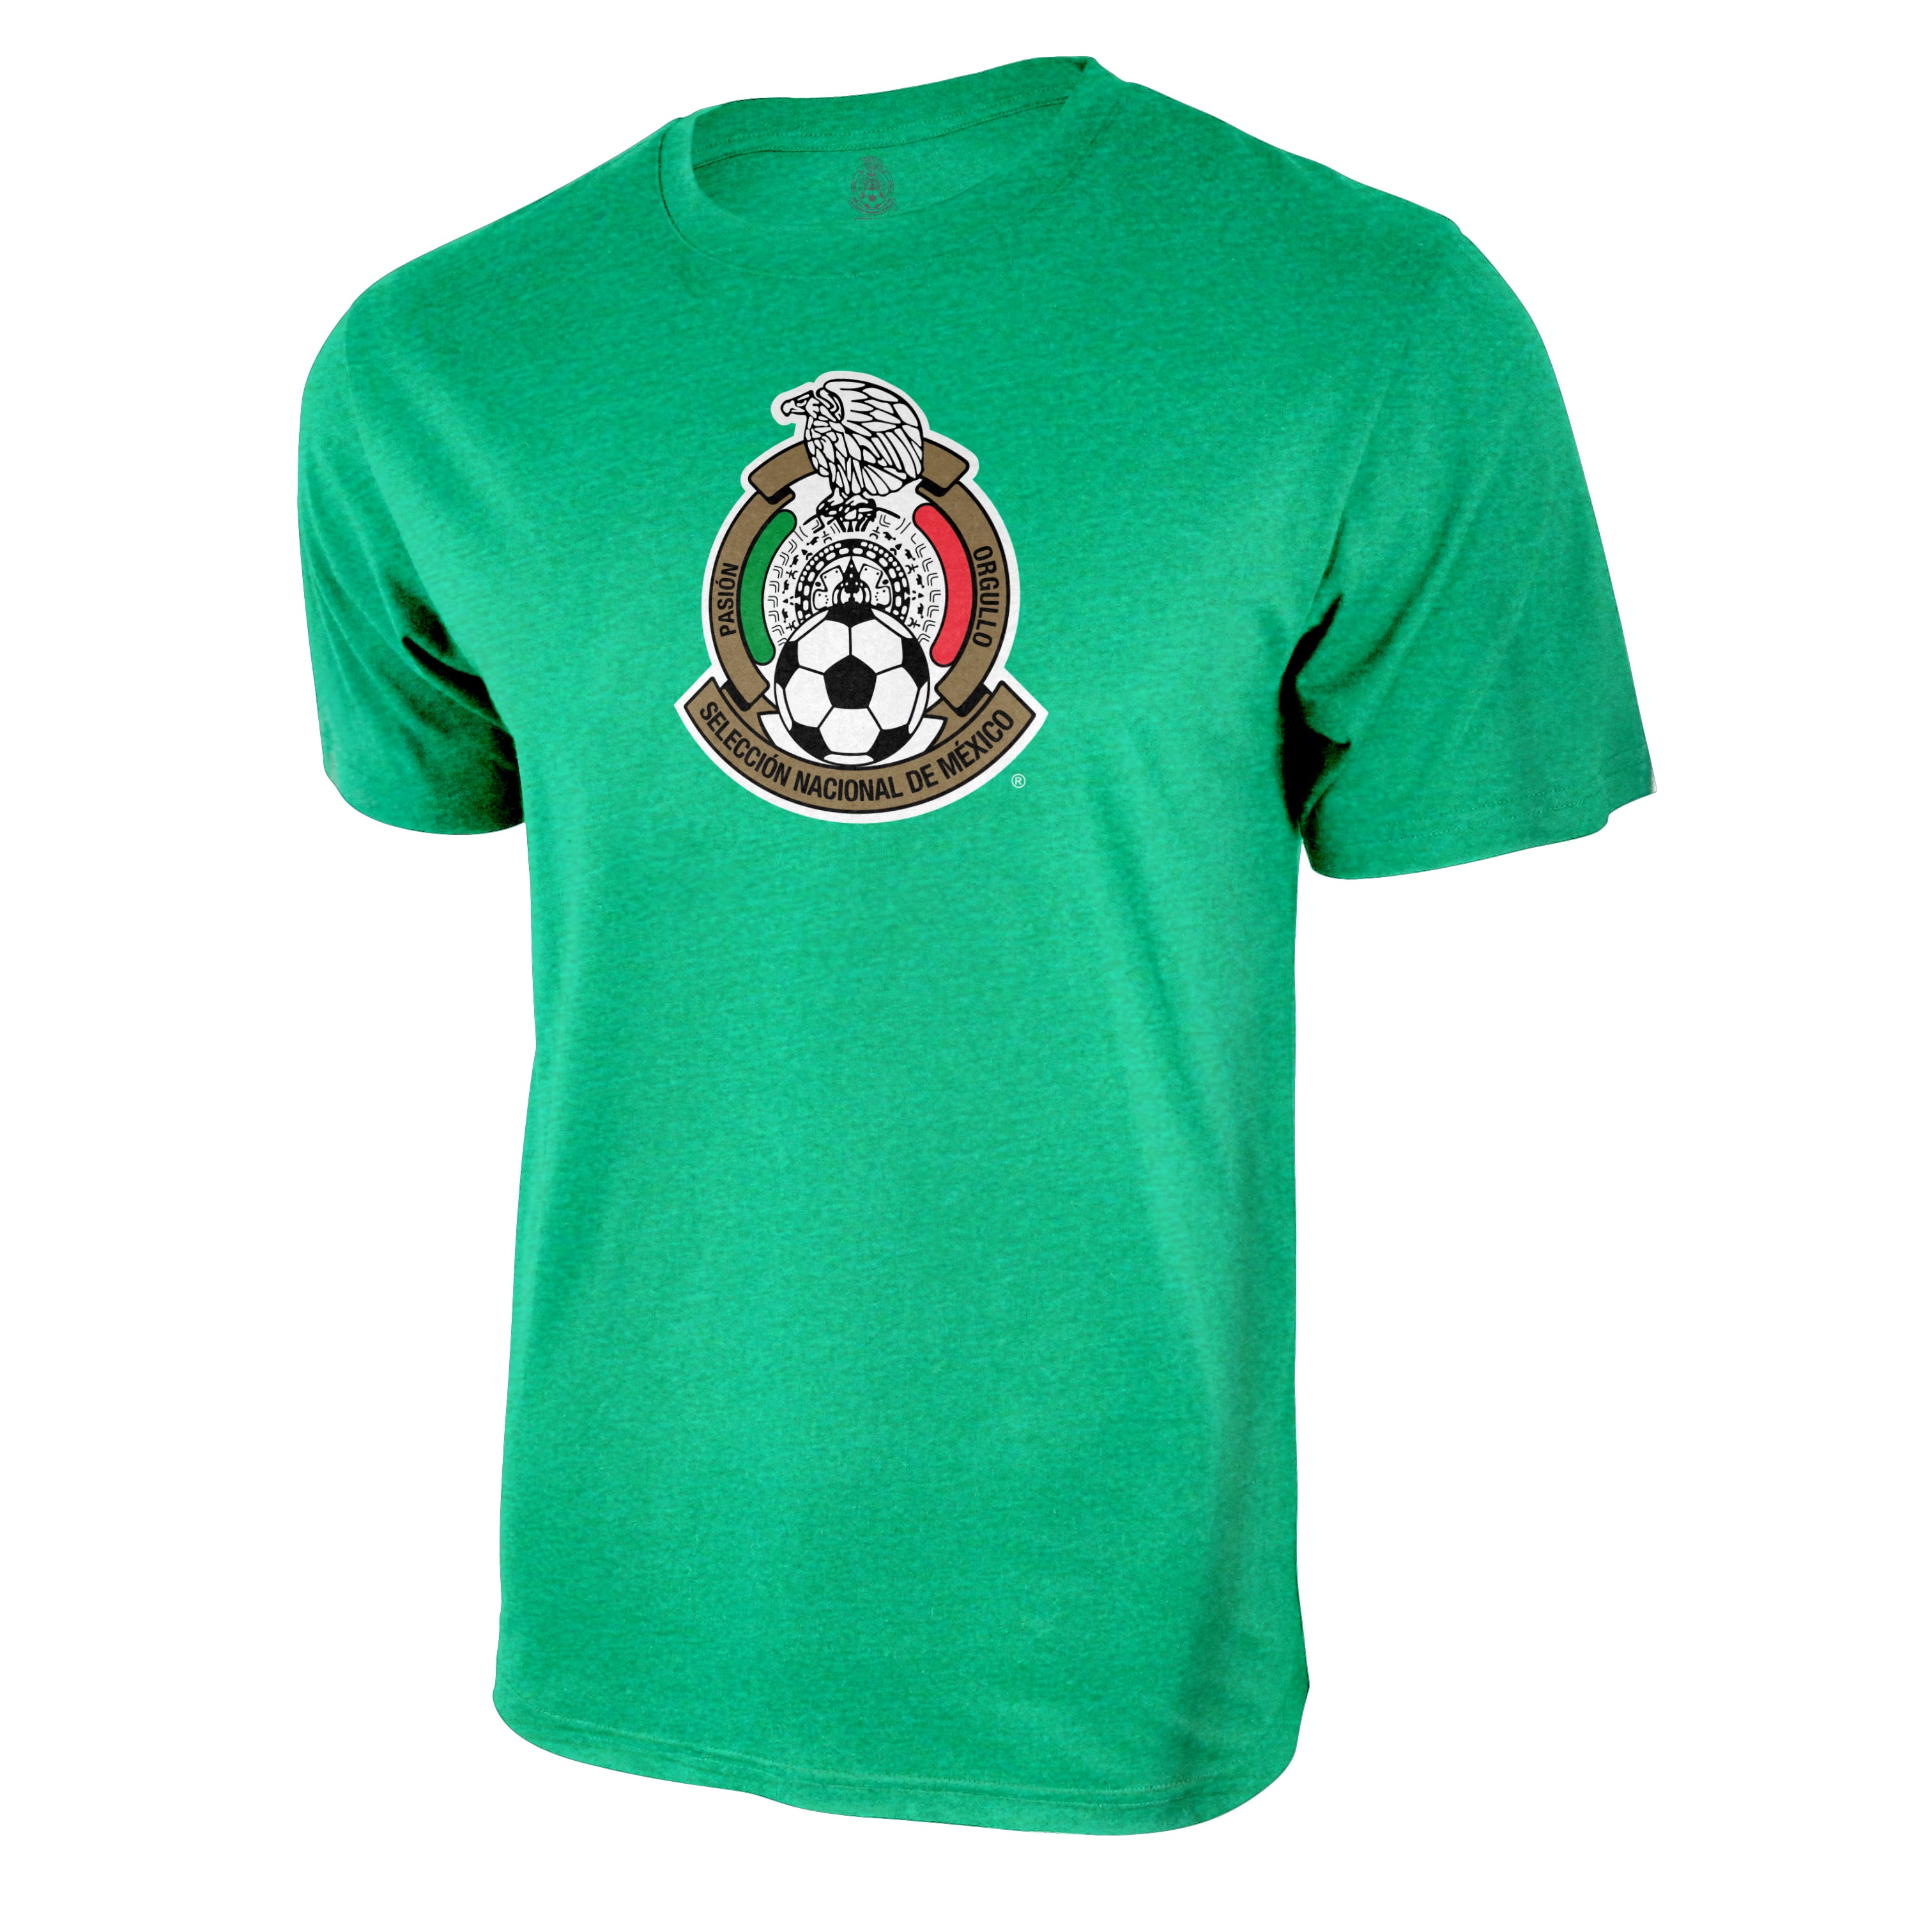 all mexican soccer team logos